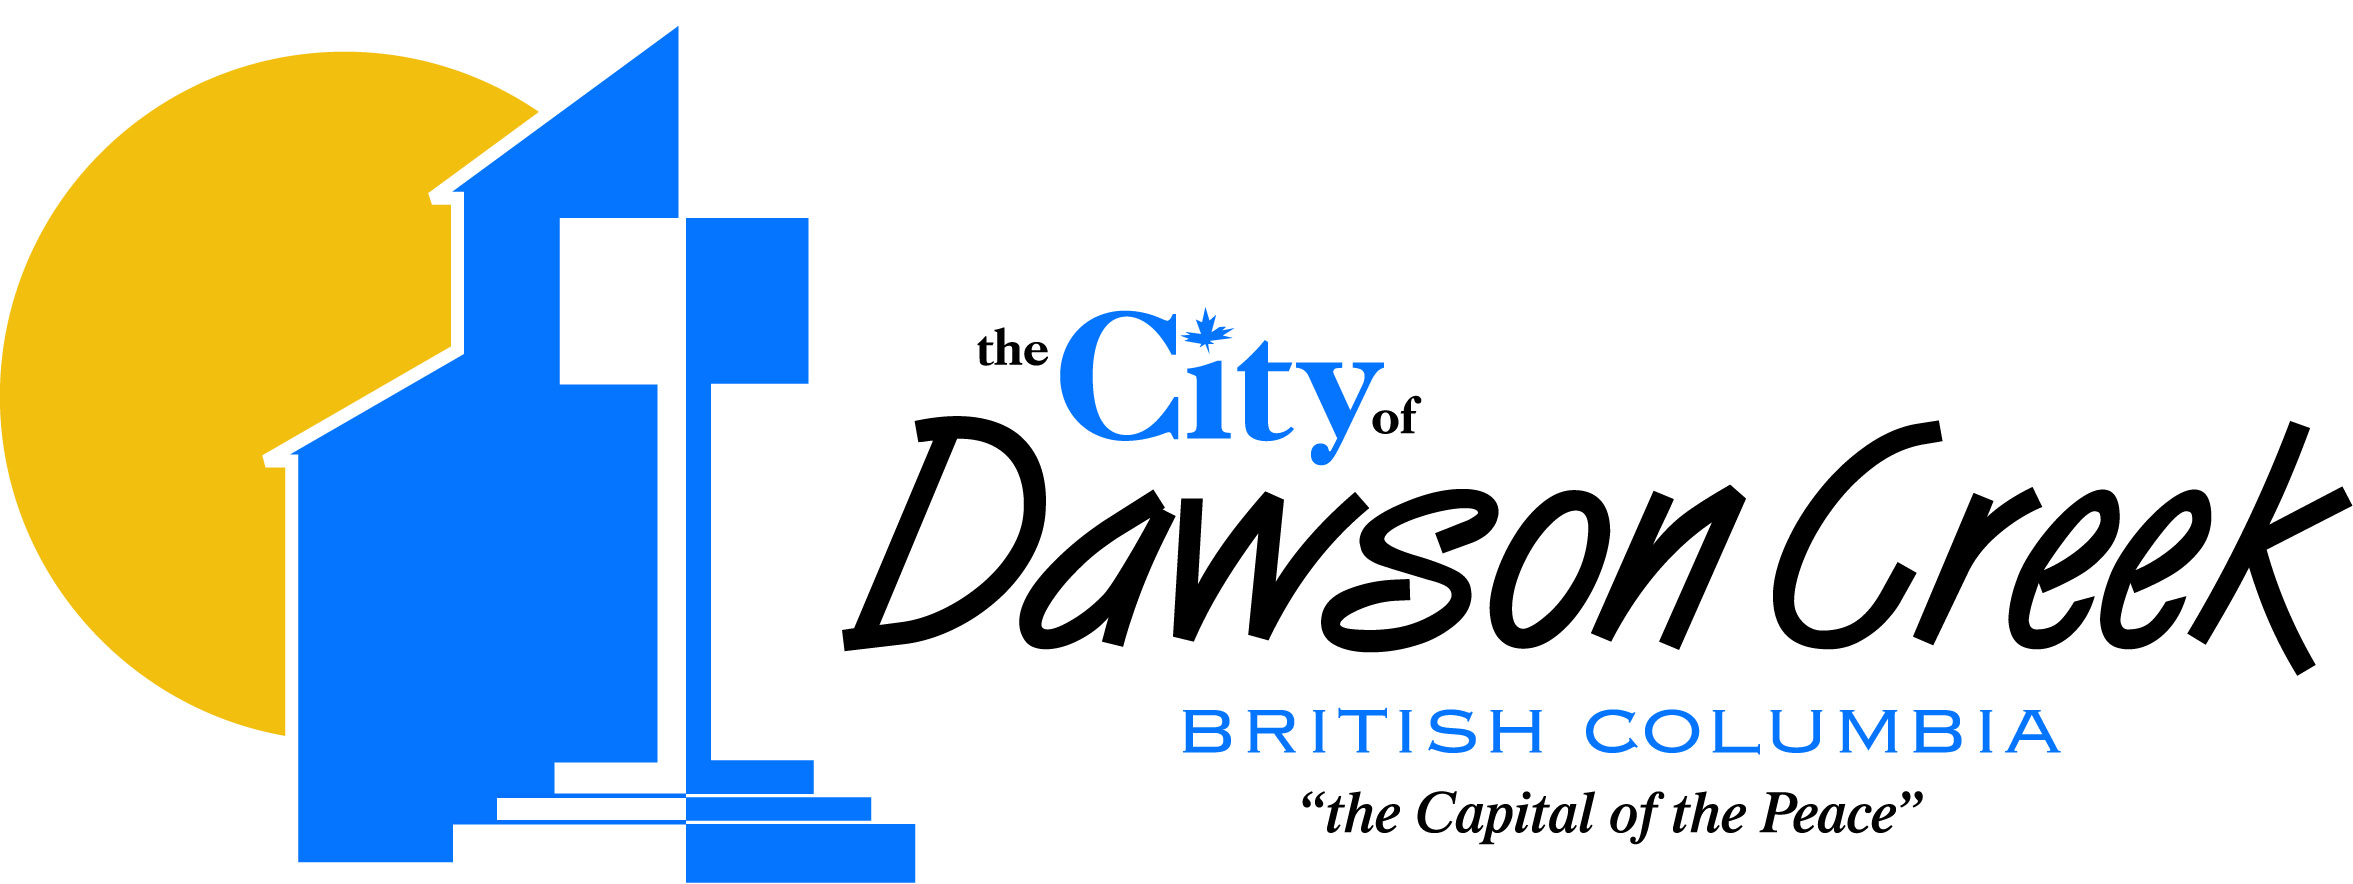 The City of Dawson Creek